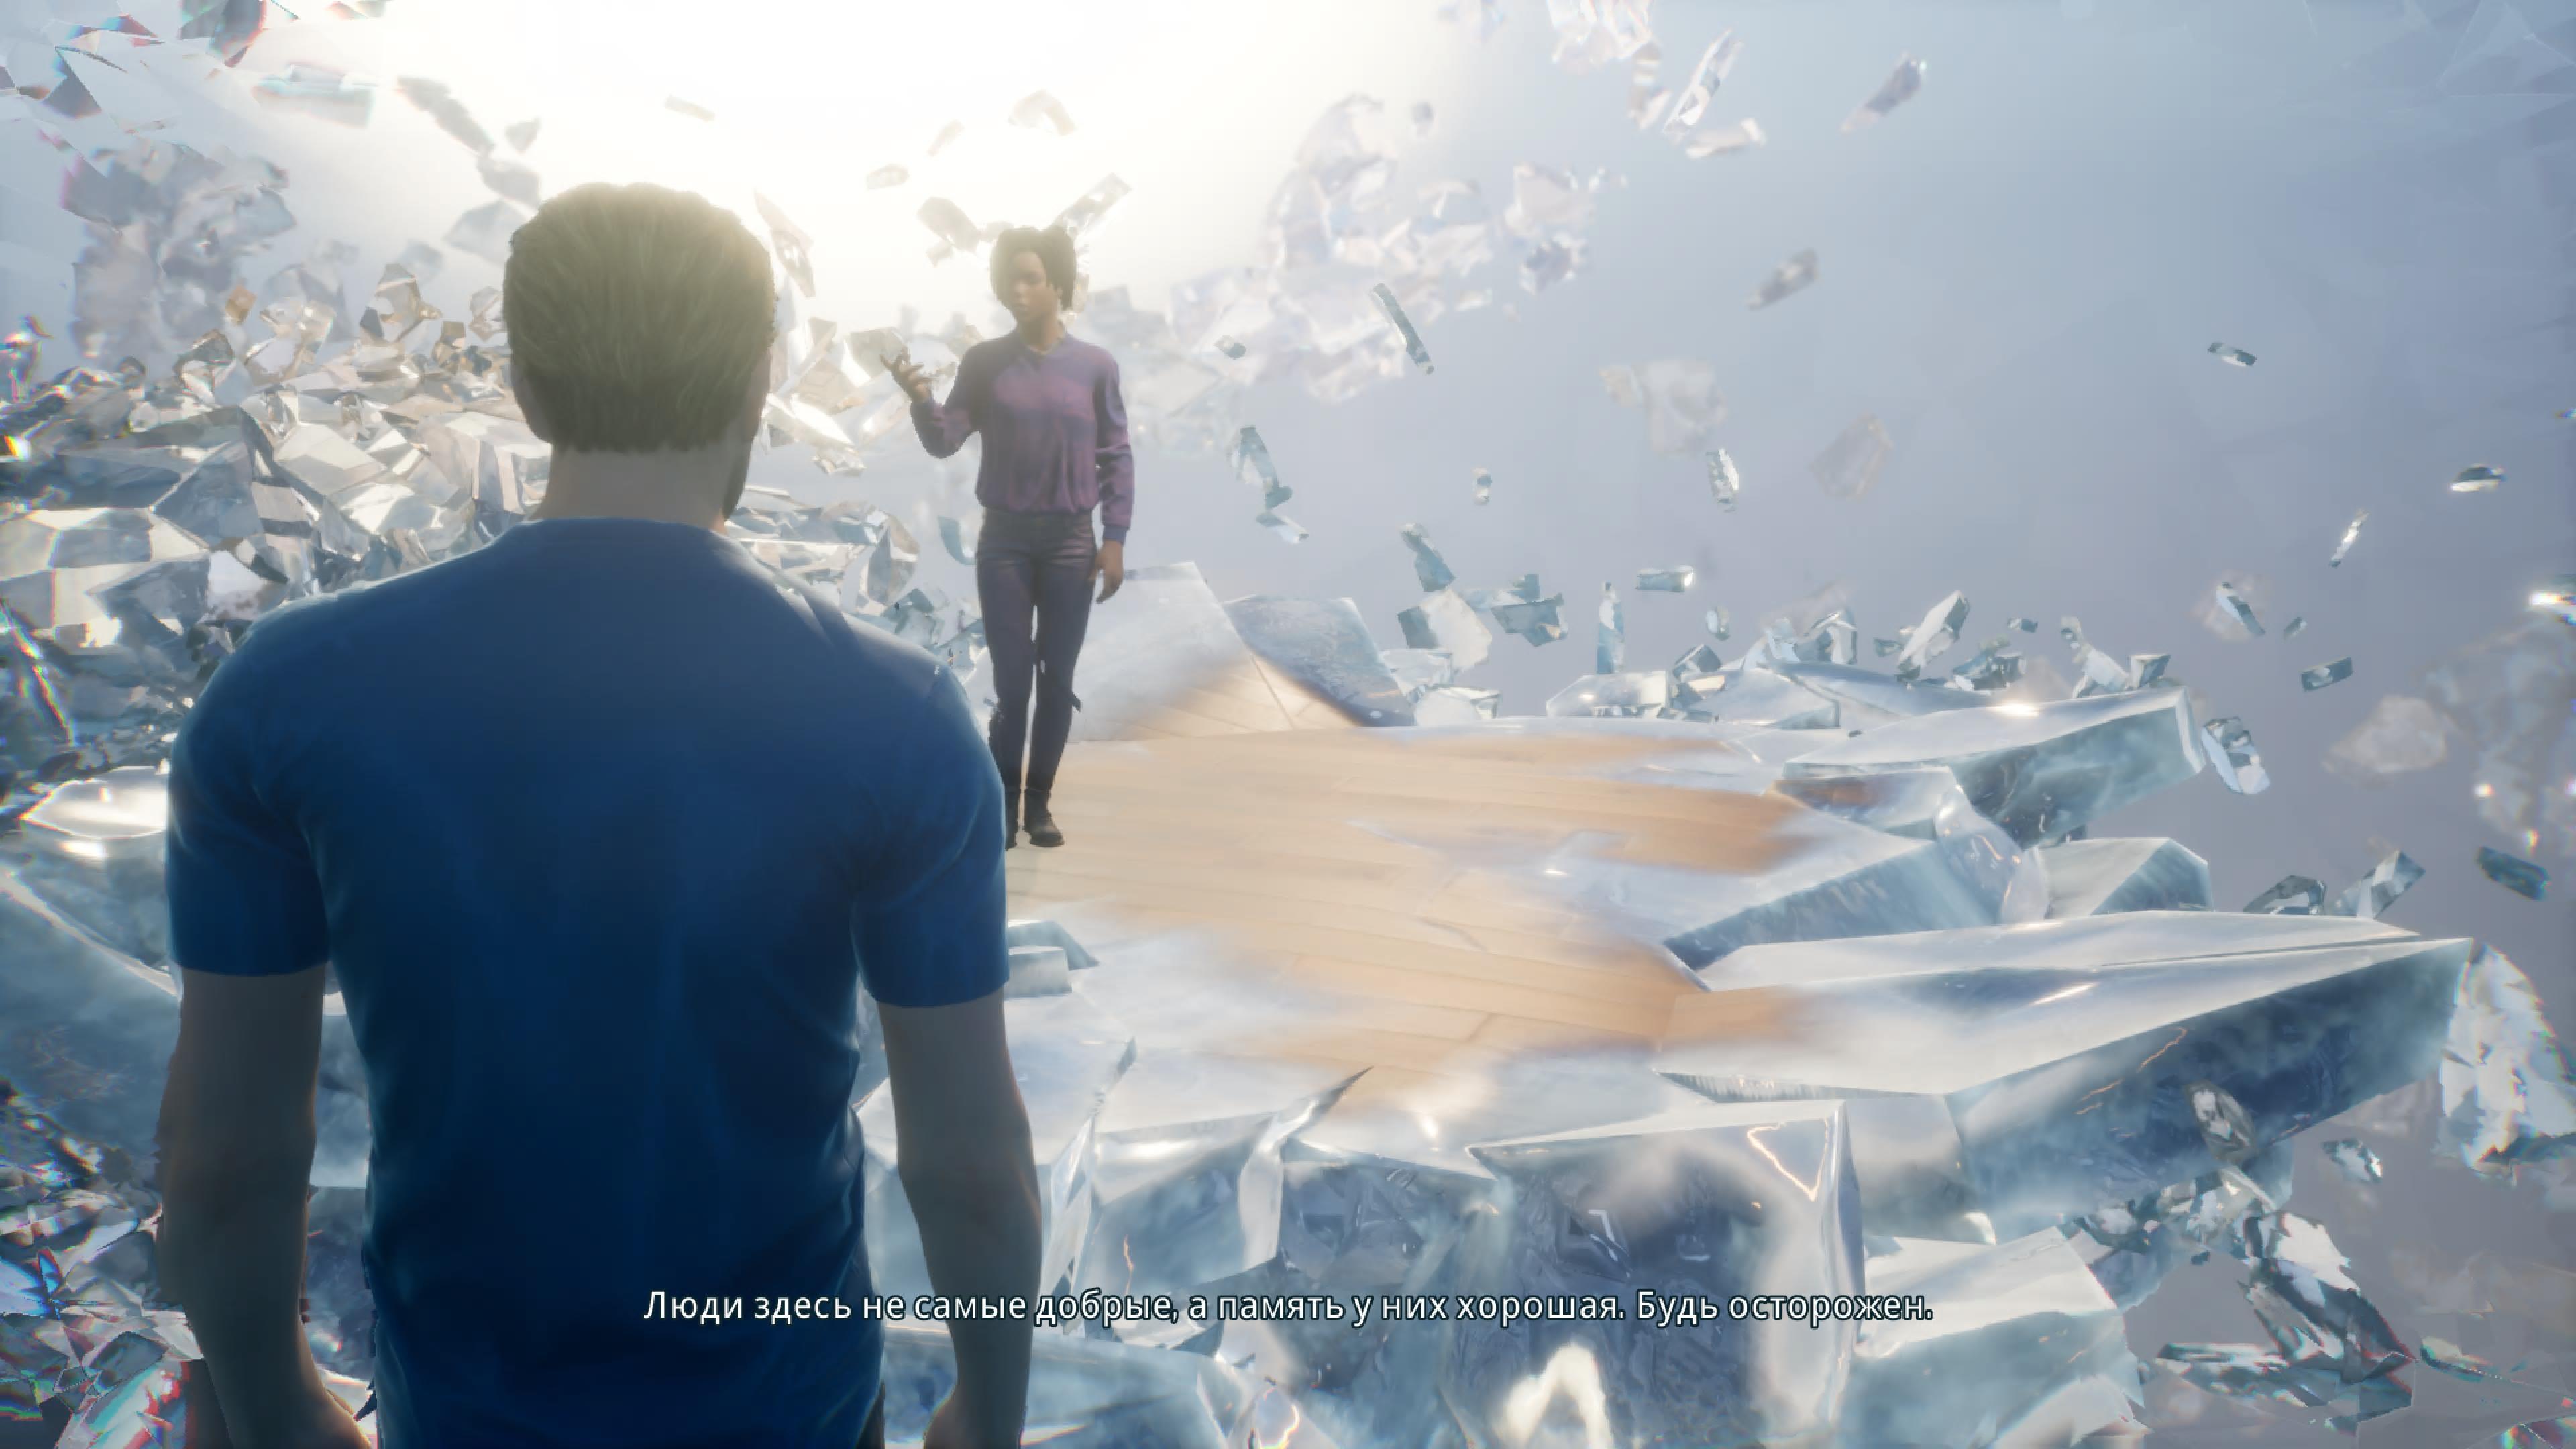 Детективное приключение от создателей Life is Strange: Обзор Twin Mirror